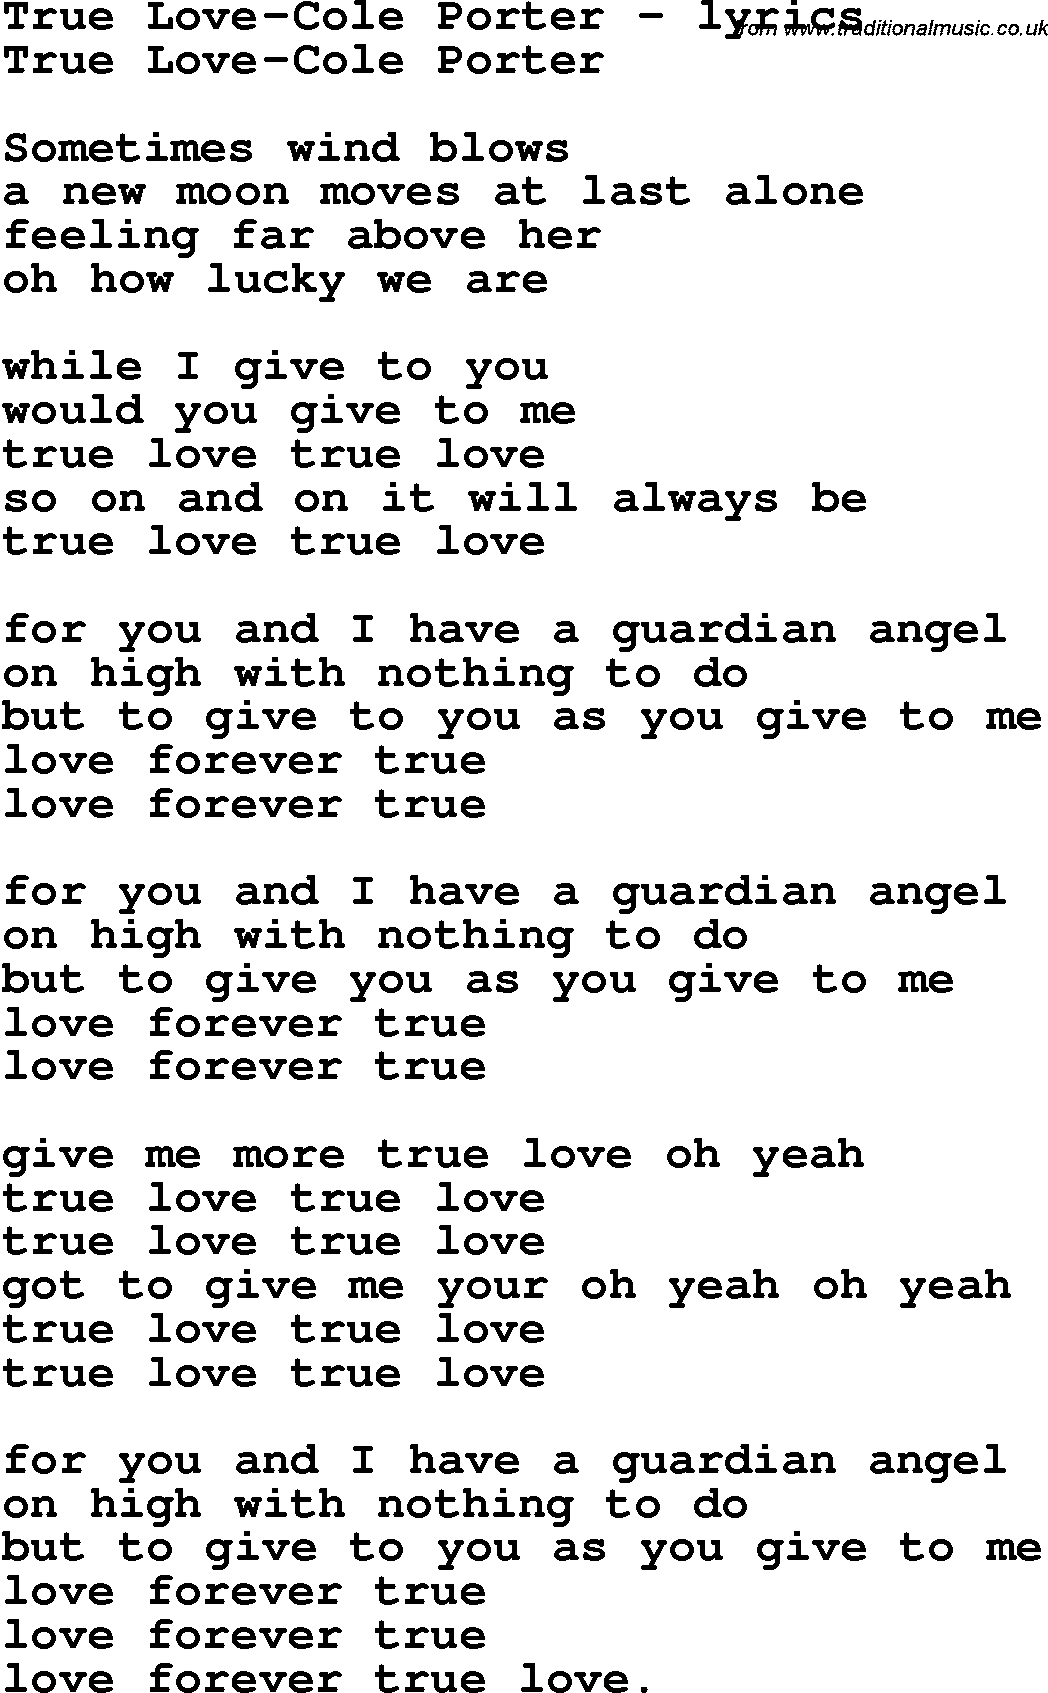 TRUE love! P!NK  True love lyrics, Favorite lyrics, Song lyric quotes